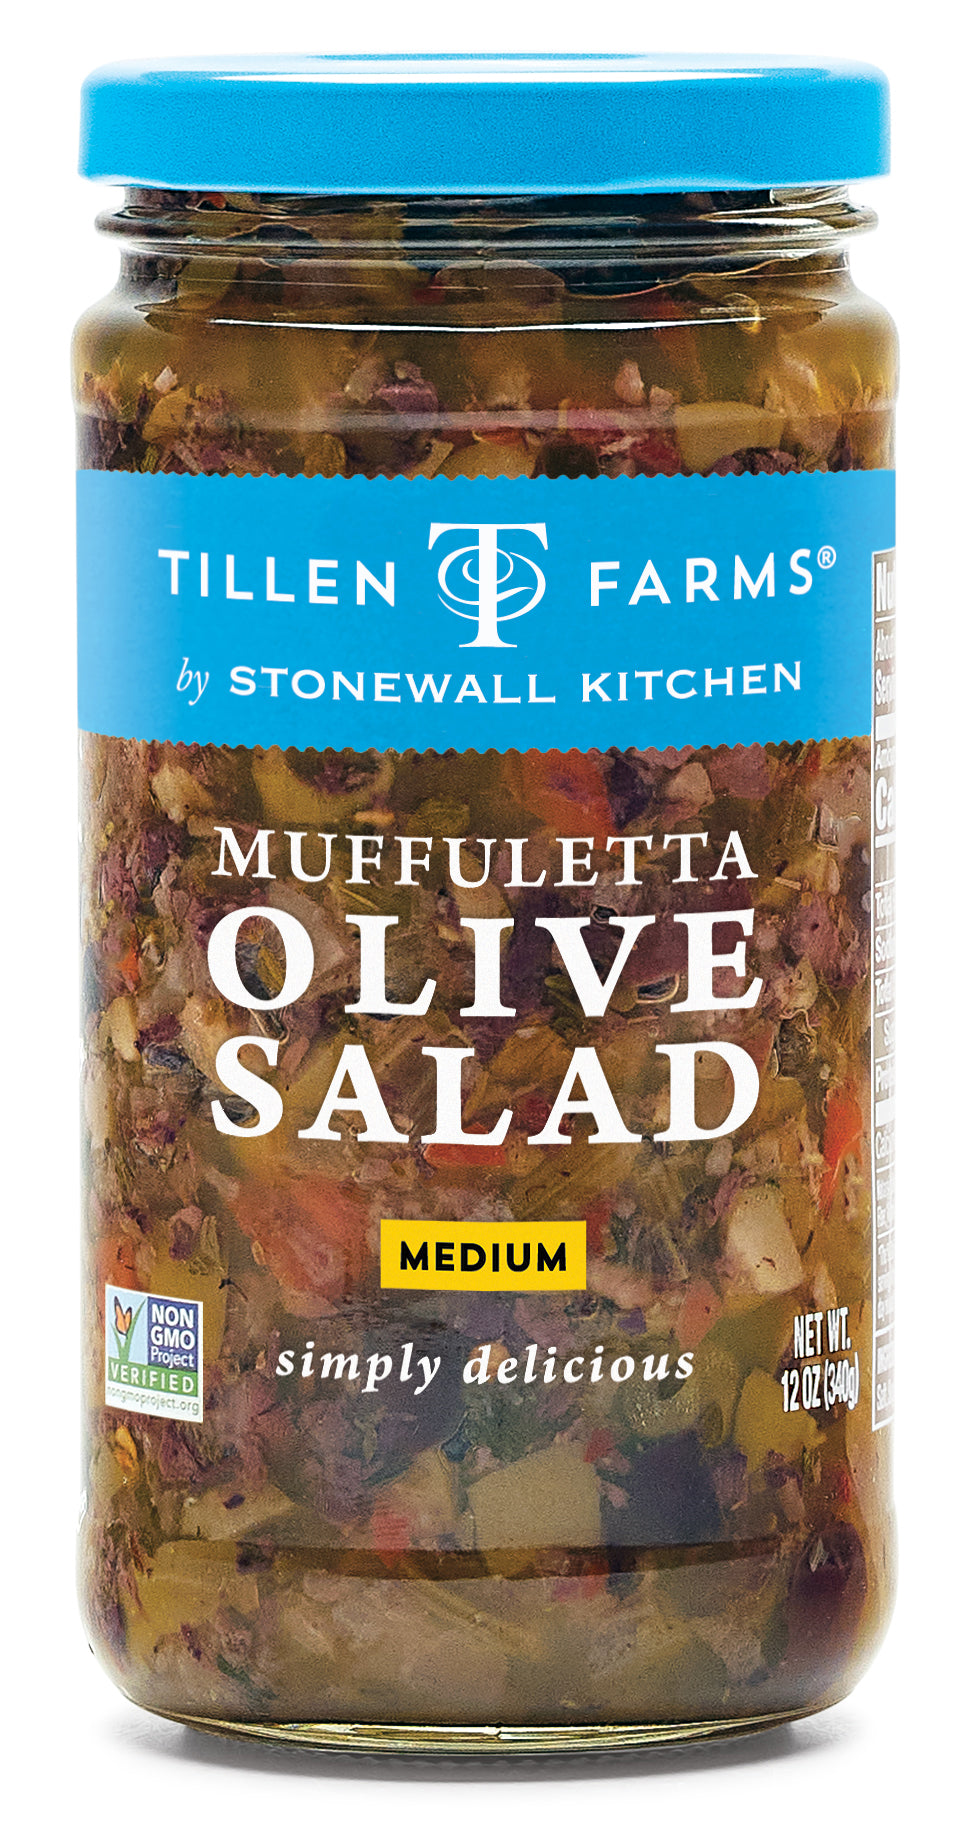 Tillen Farms by Stonewall Kitchen Muffuletta Olive Salad - Olive Oil Etcetera 